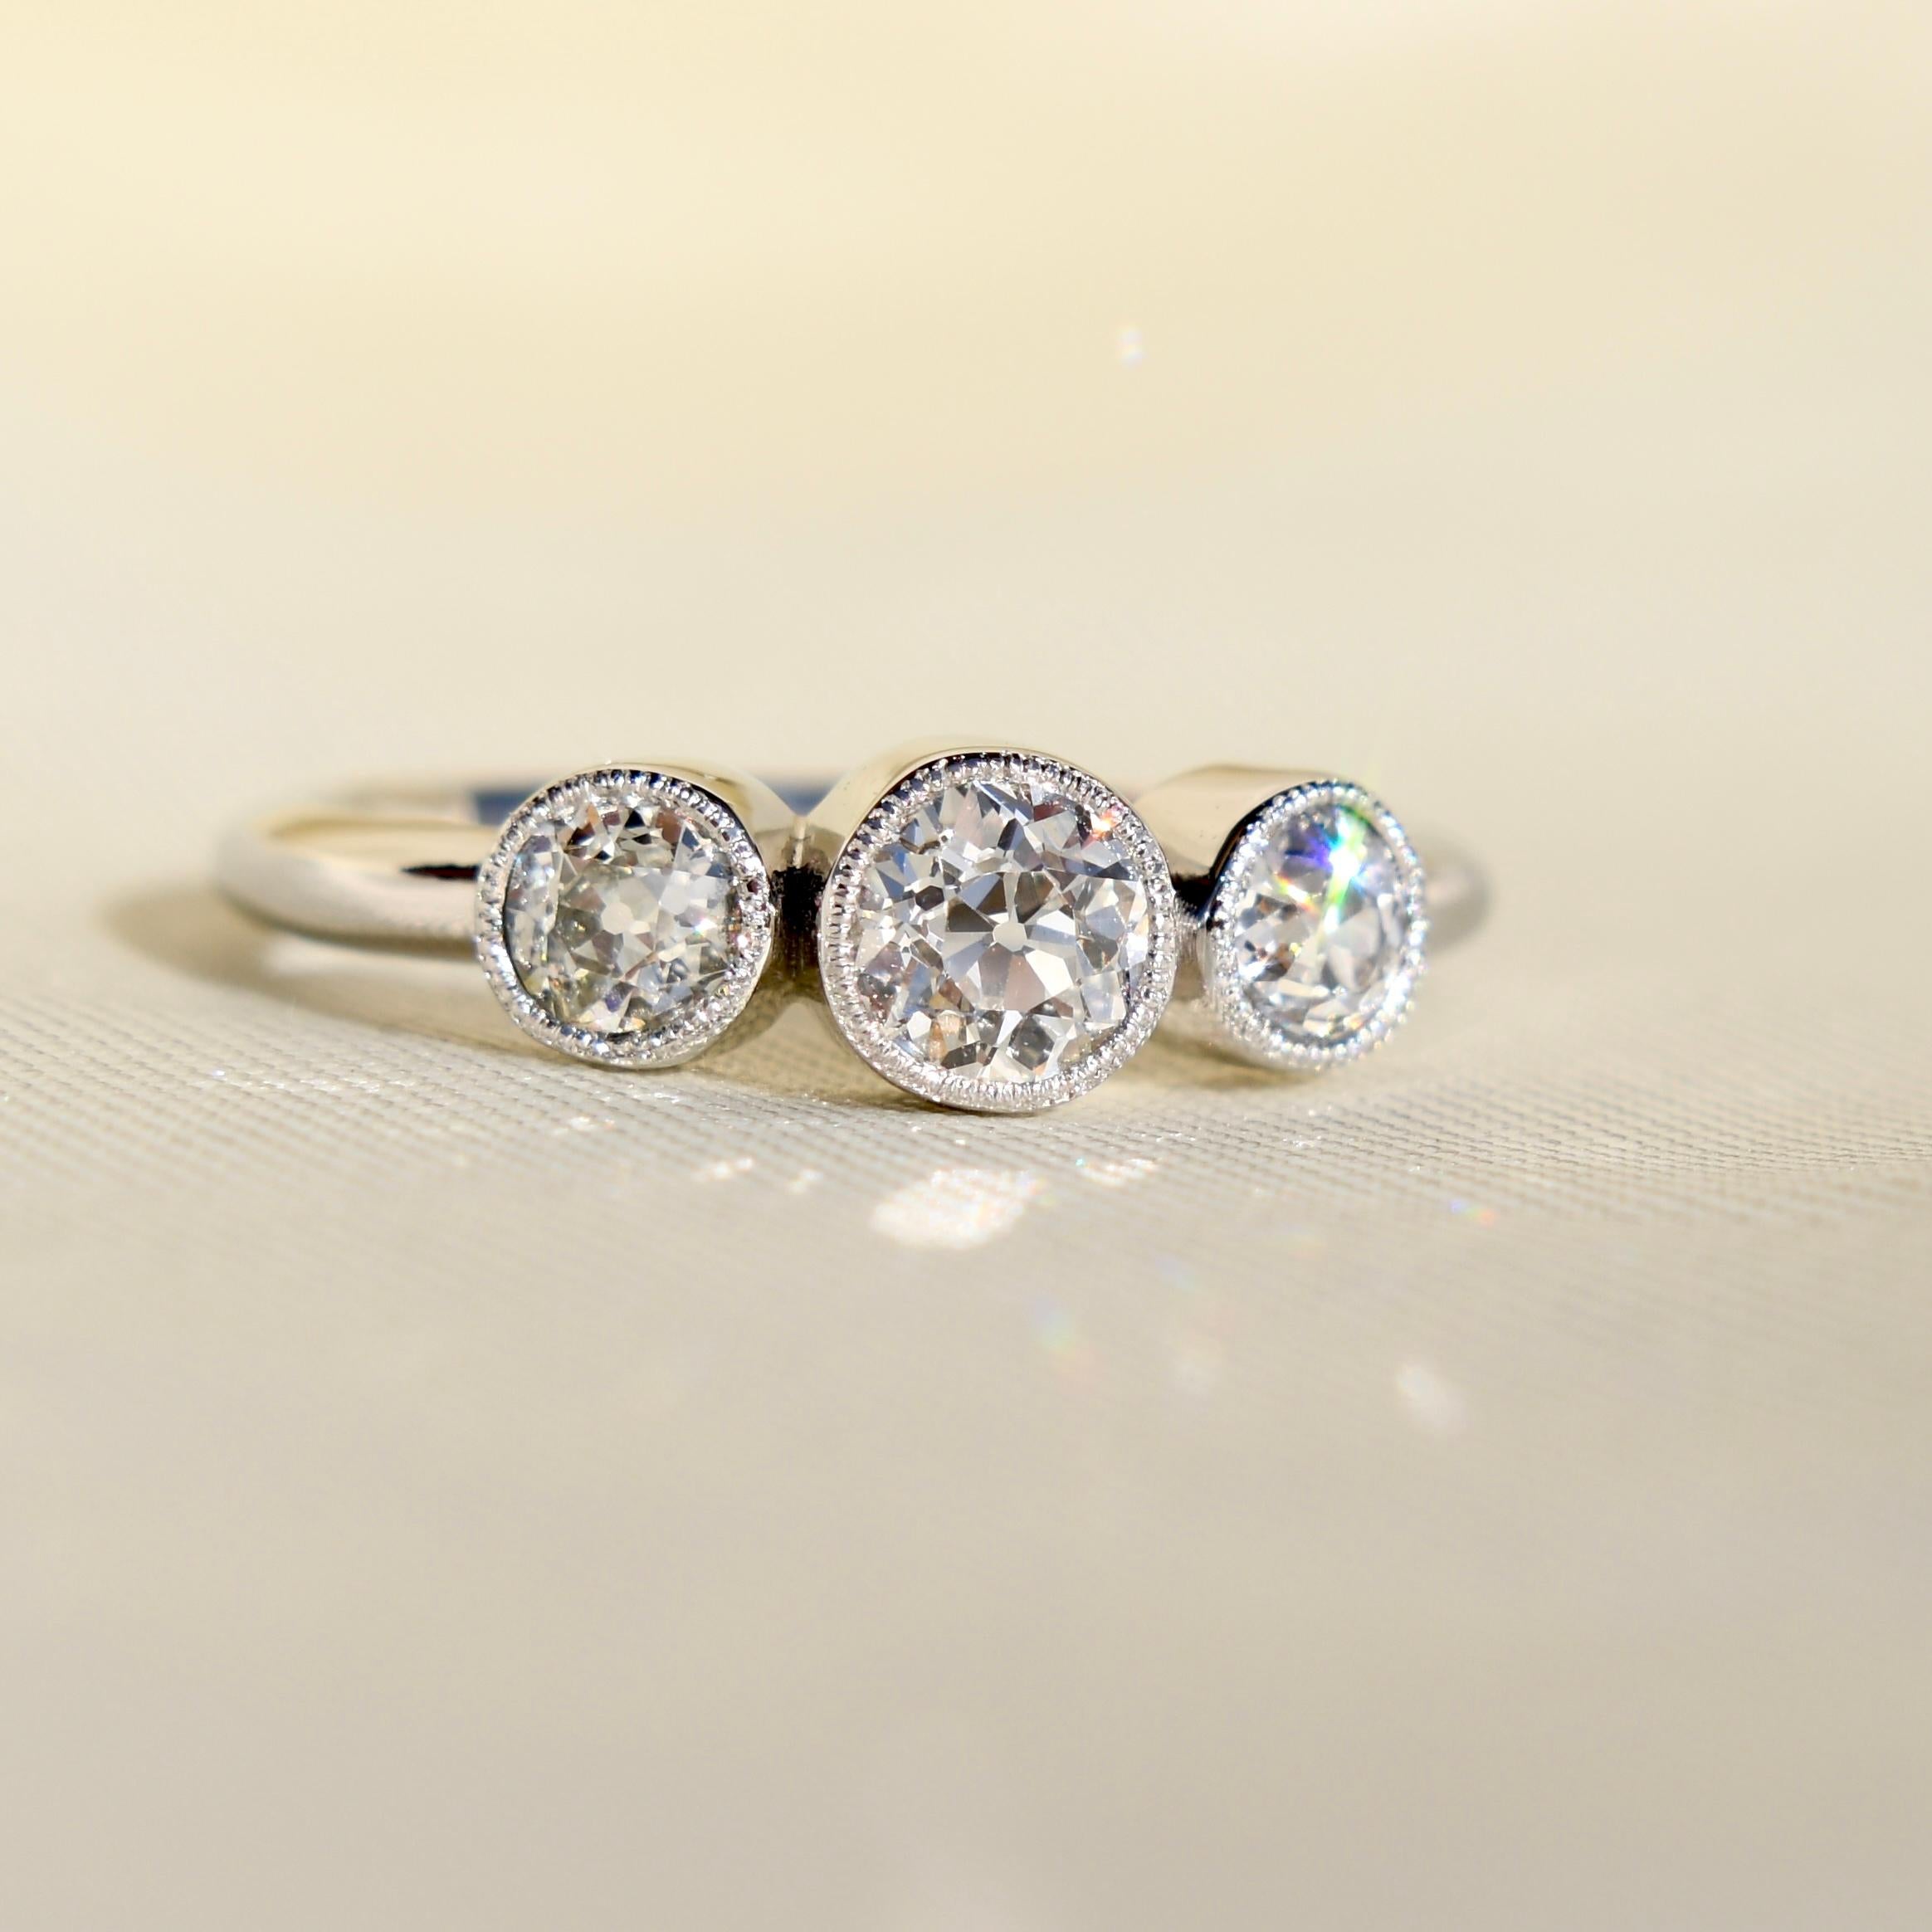 Art Deco 0.86ct old European cut diamond three stone ring with Millegrain, IGI certified